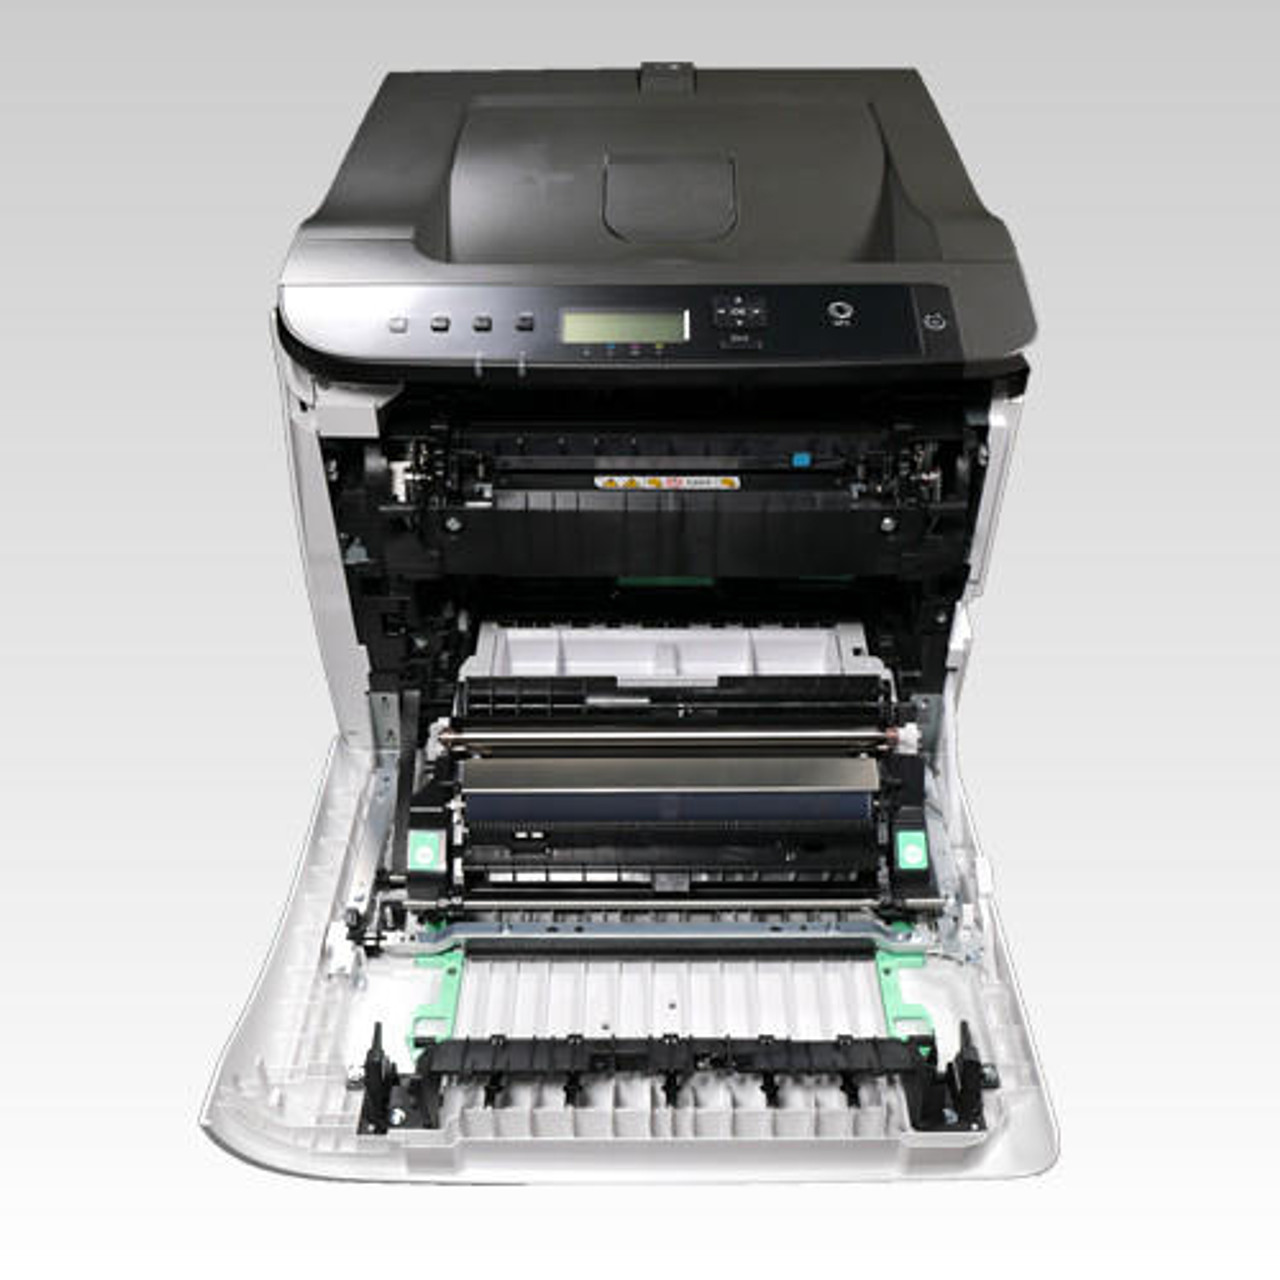 iColor 560 Printer - On-demand Full Color + White Digital Laser